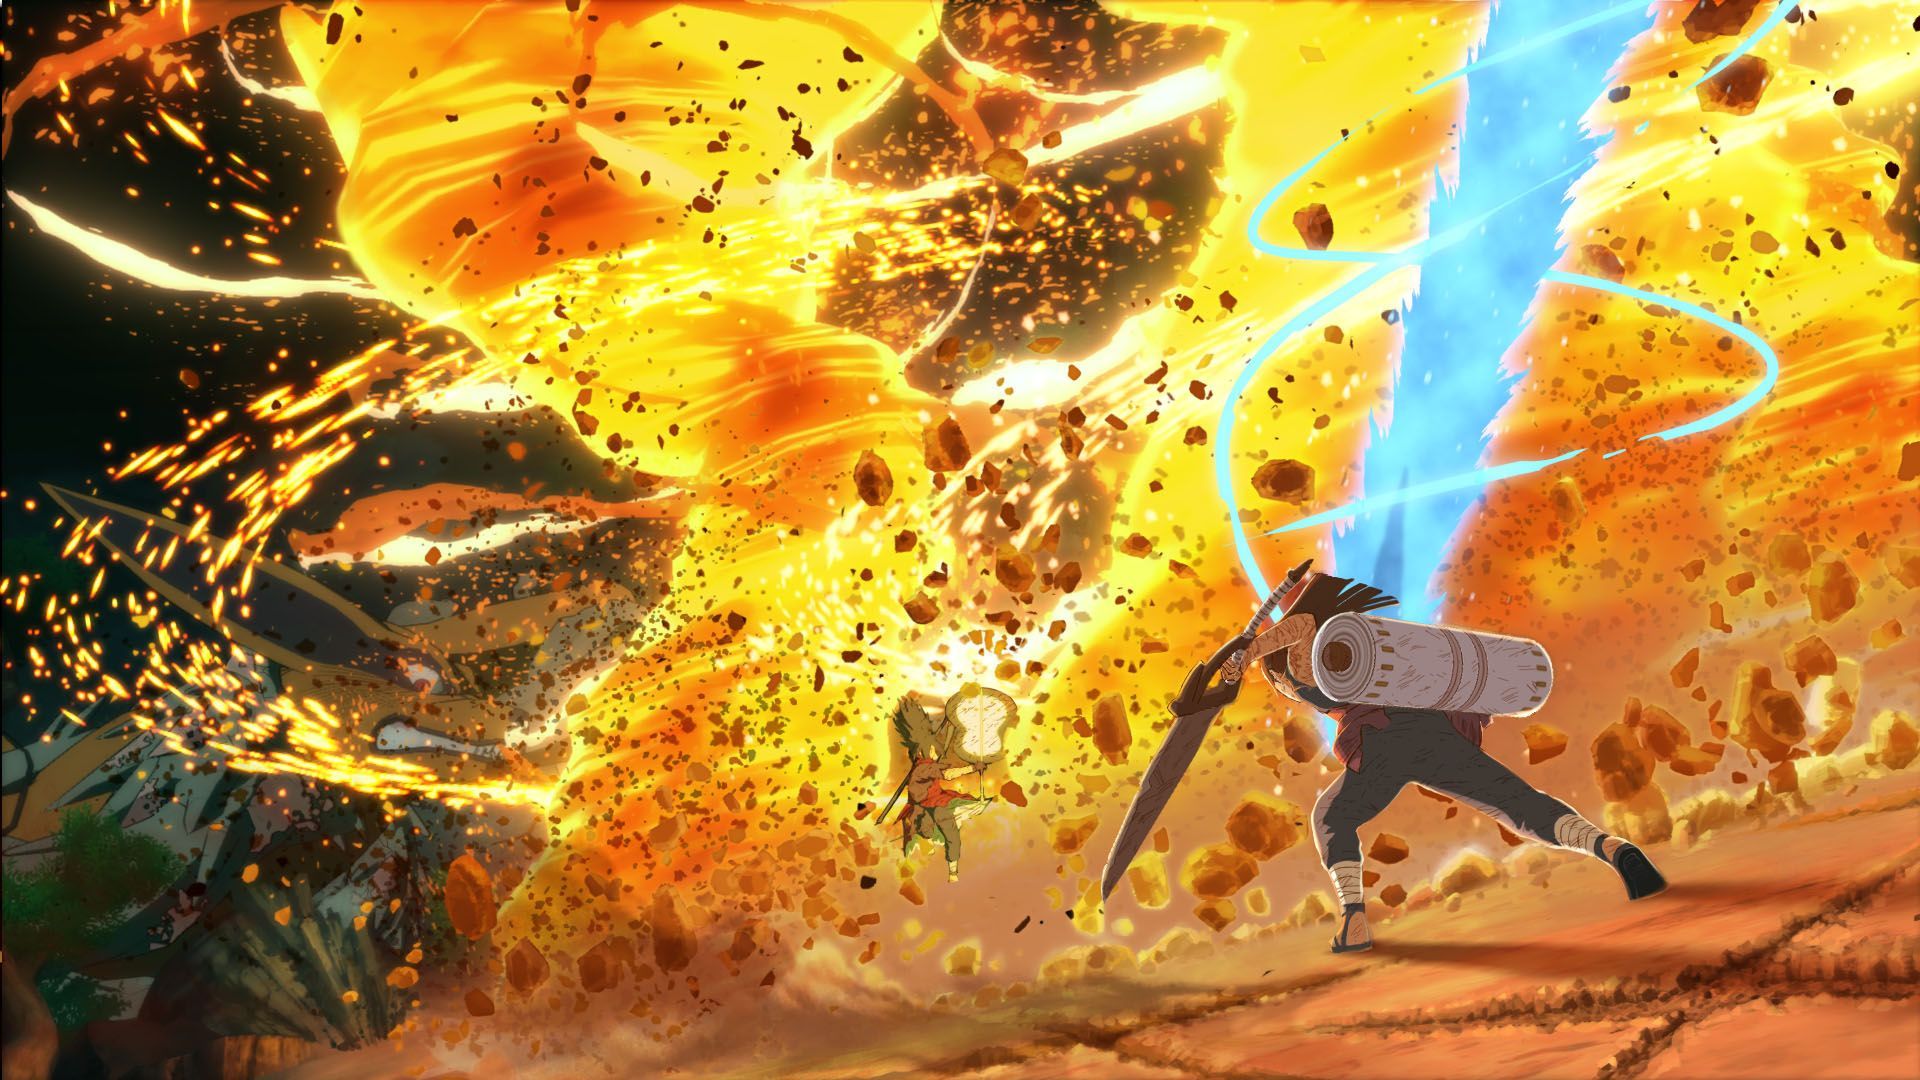 Naruto's Next Ultimate Ninja Storm Targets PS4 And Xbox One. Naruto shippuden, Naruto, Naruto uzumaki